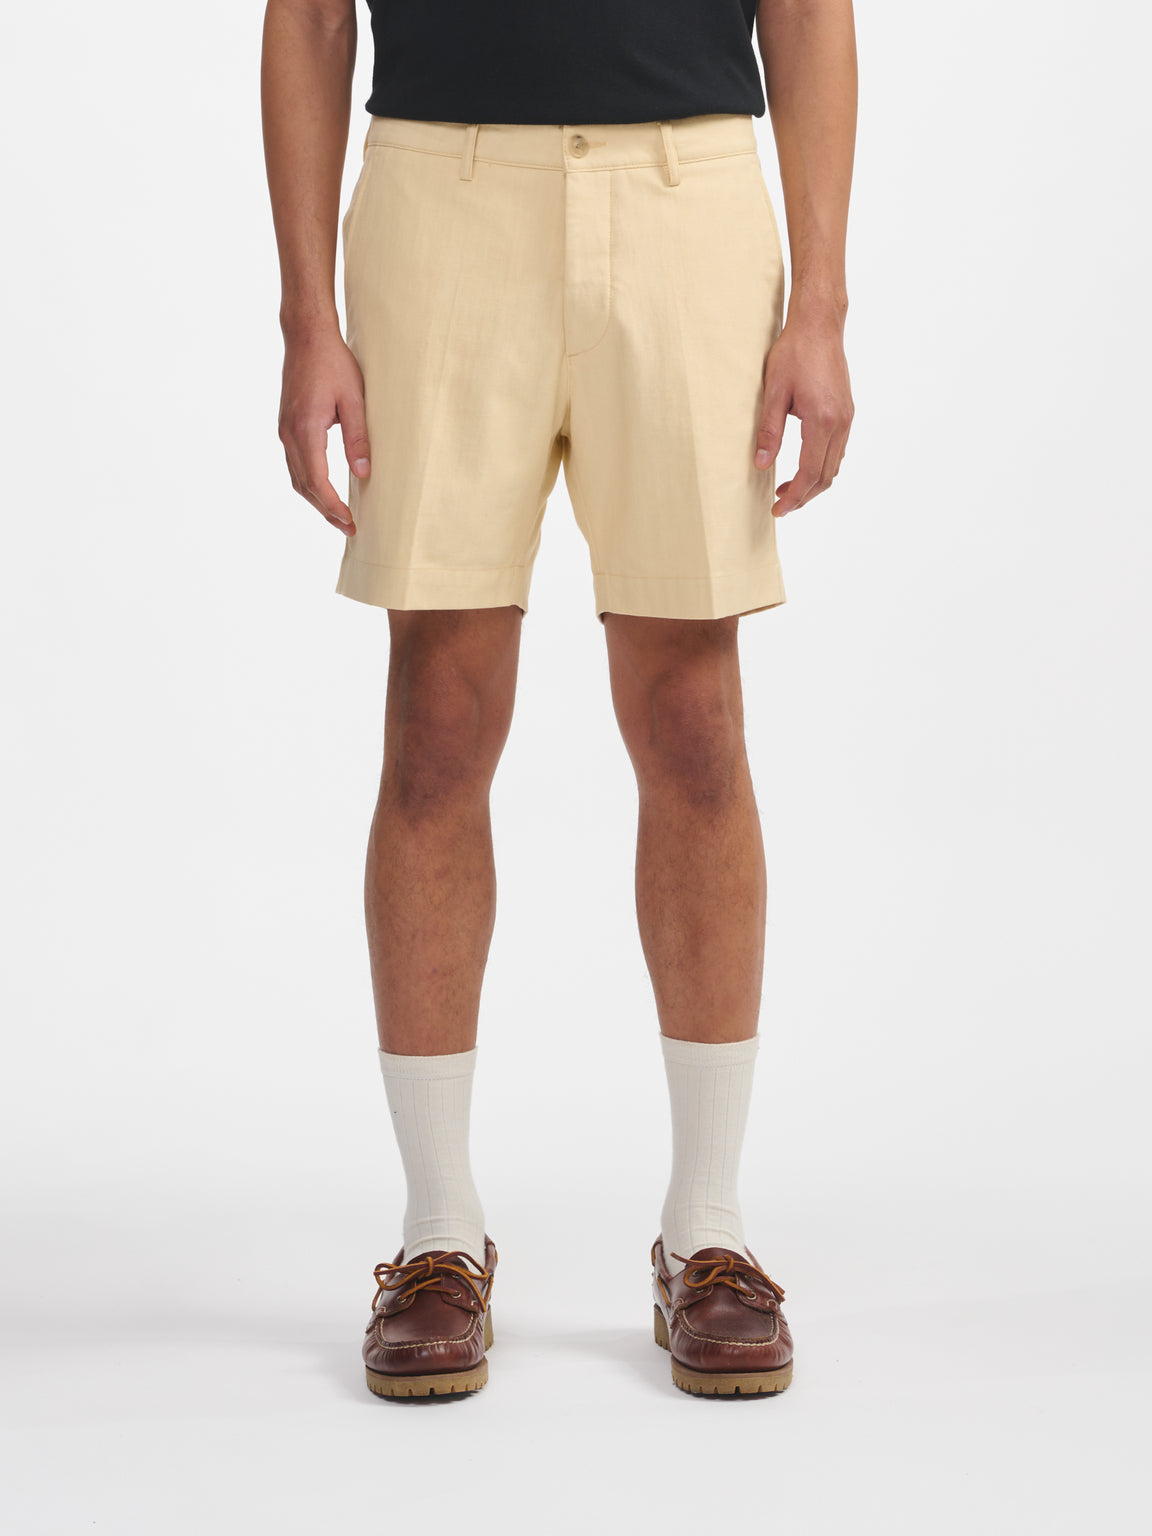 Sequoi Shorts - Beige | Men Collection | Bellerose